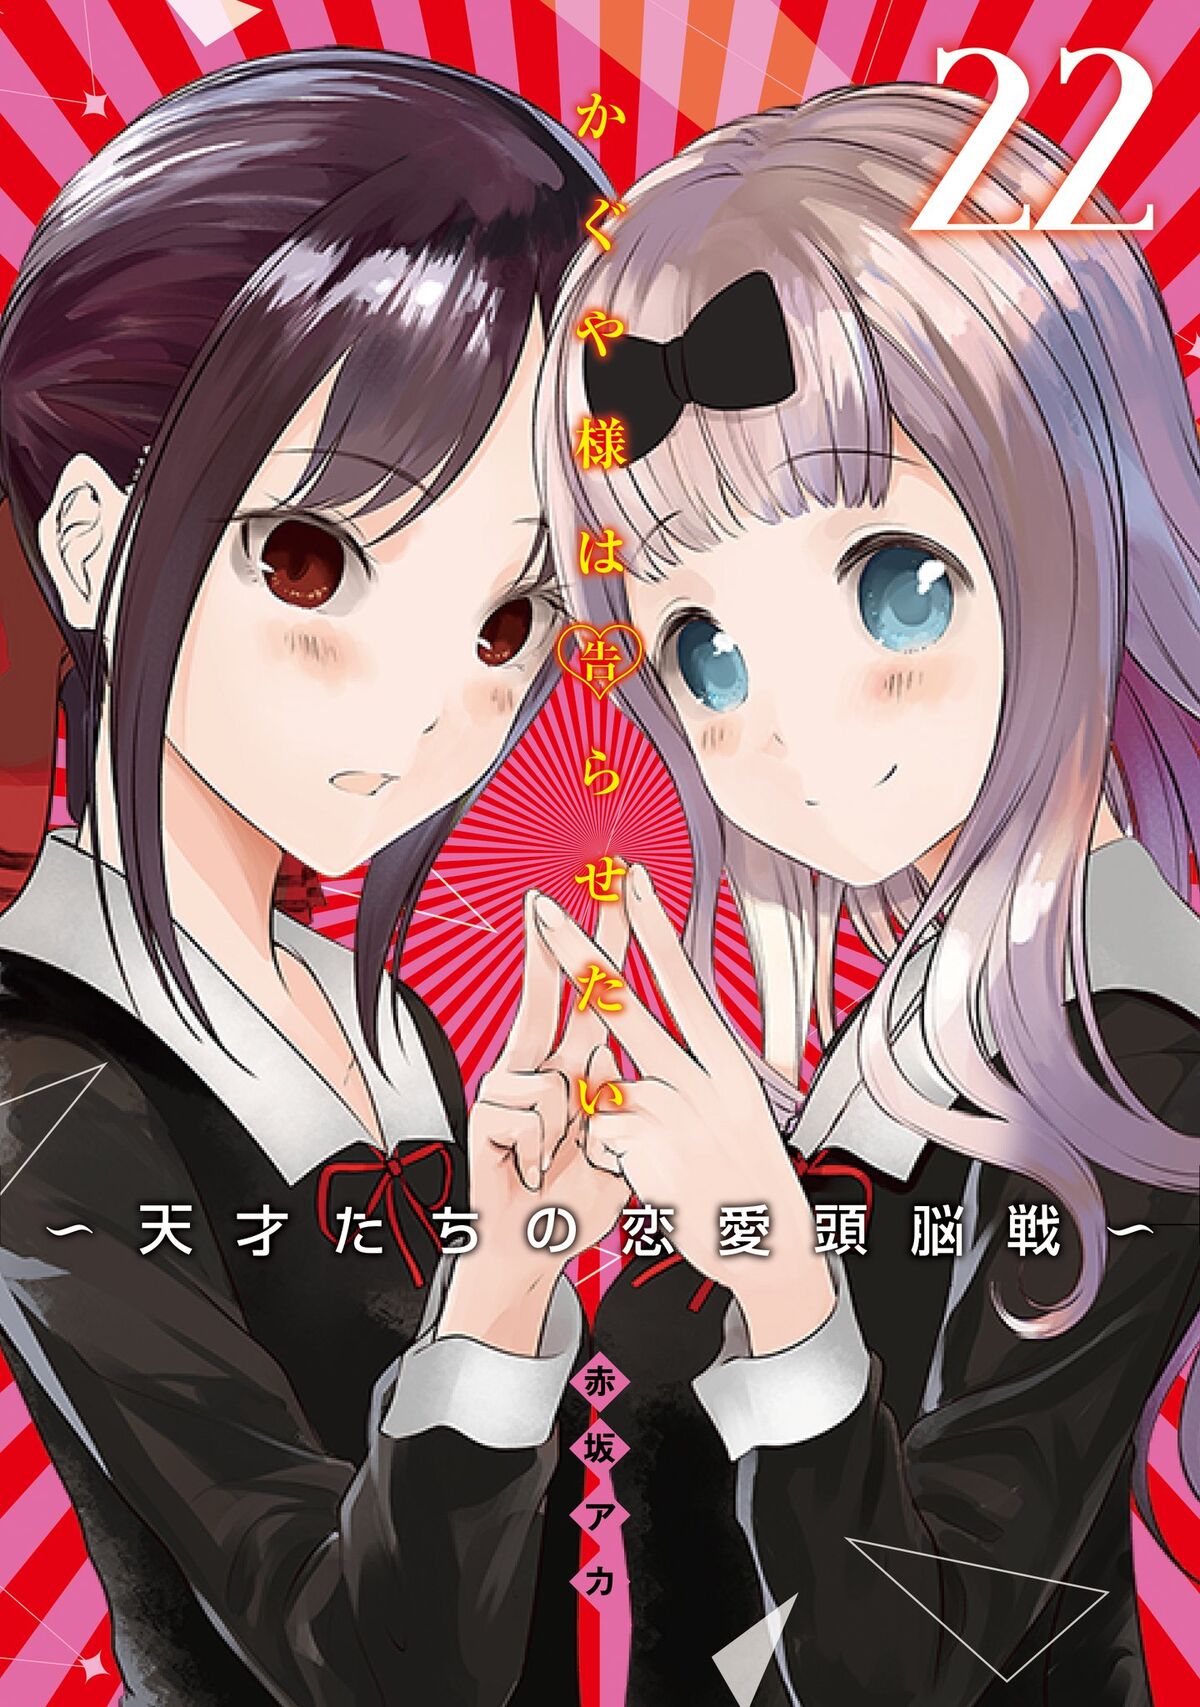 Kaguya-sama: Love Is War Manga Surpasses 22 Million Copies in